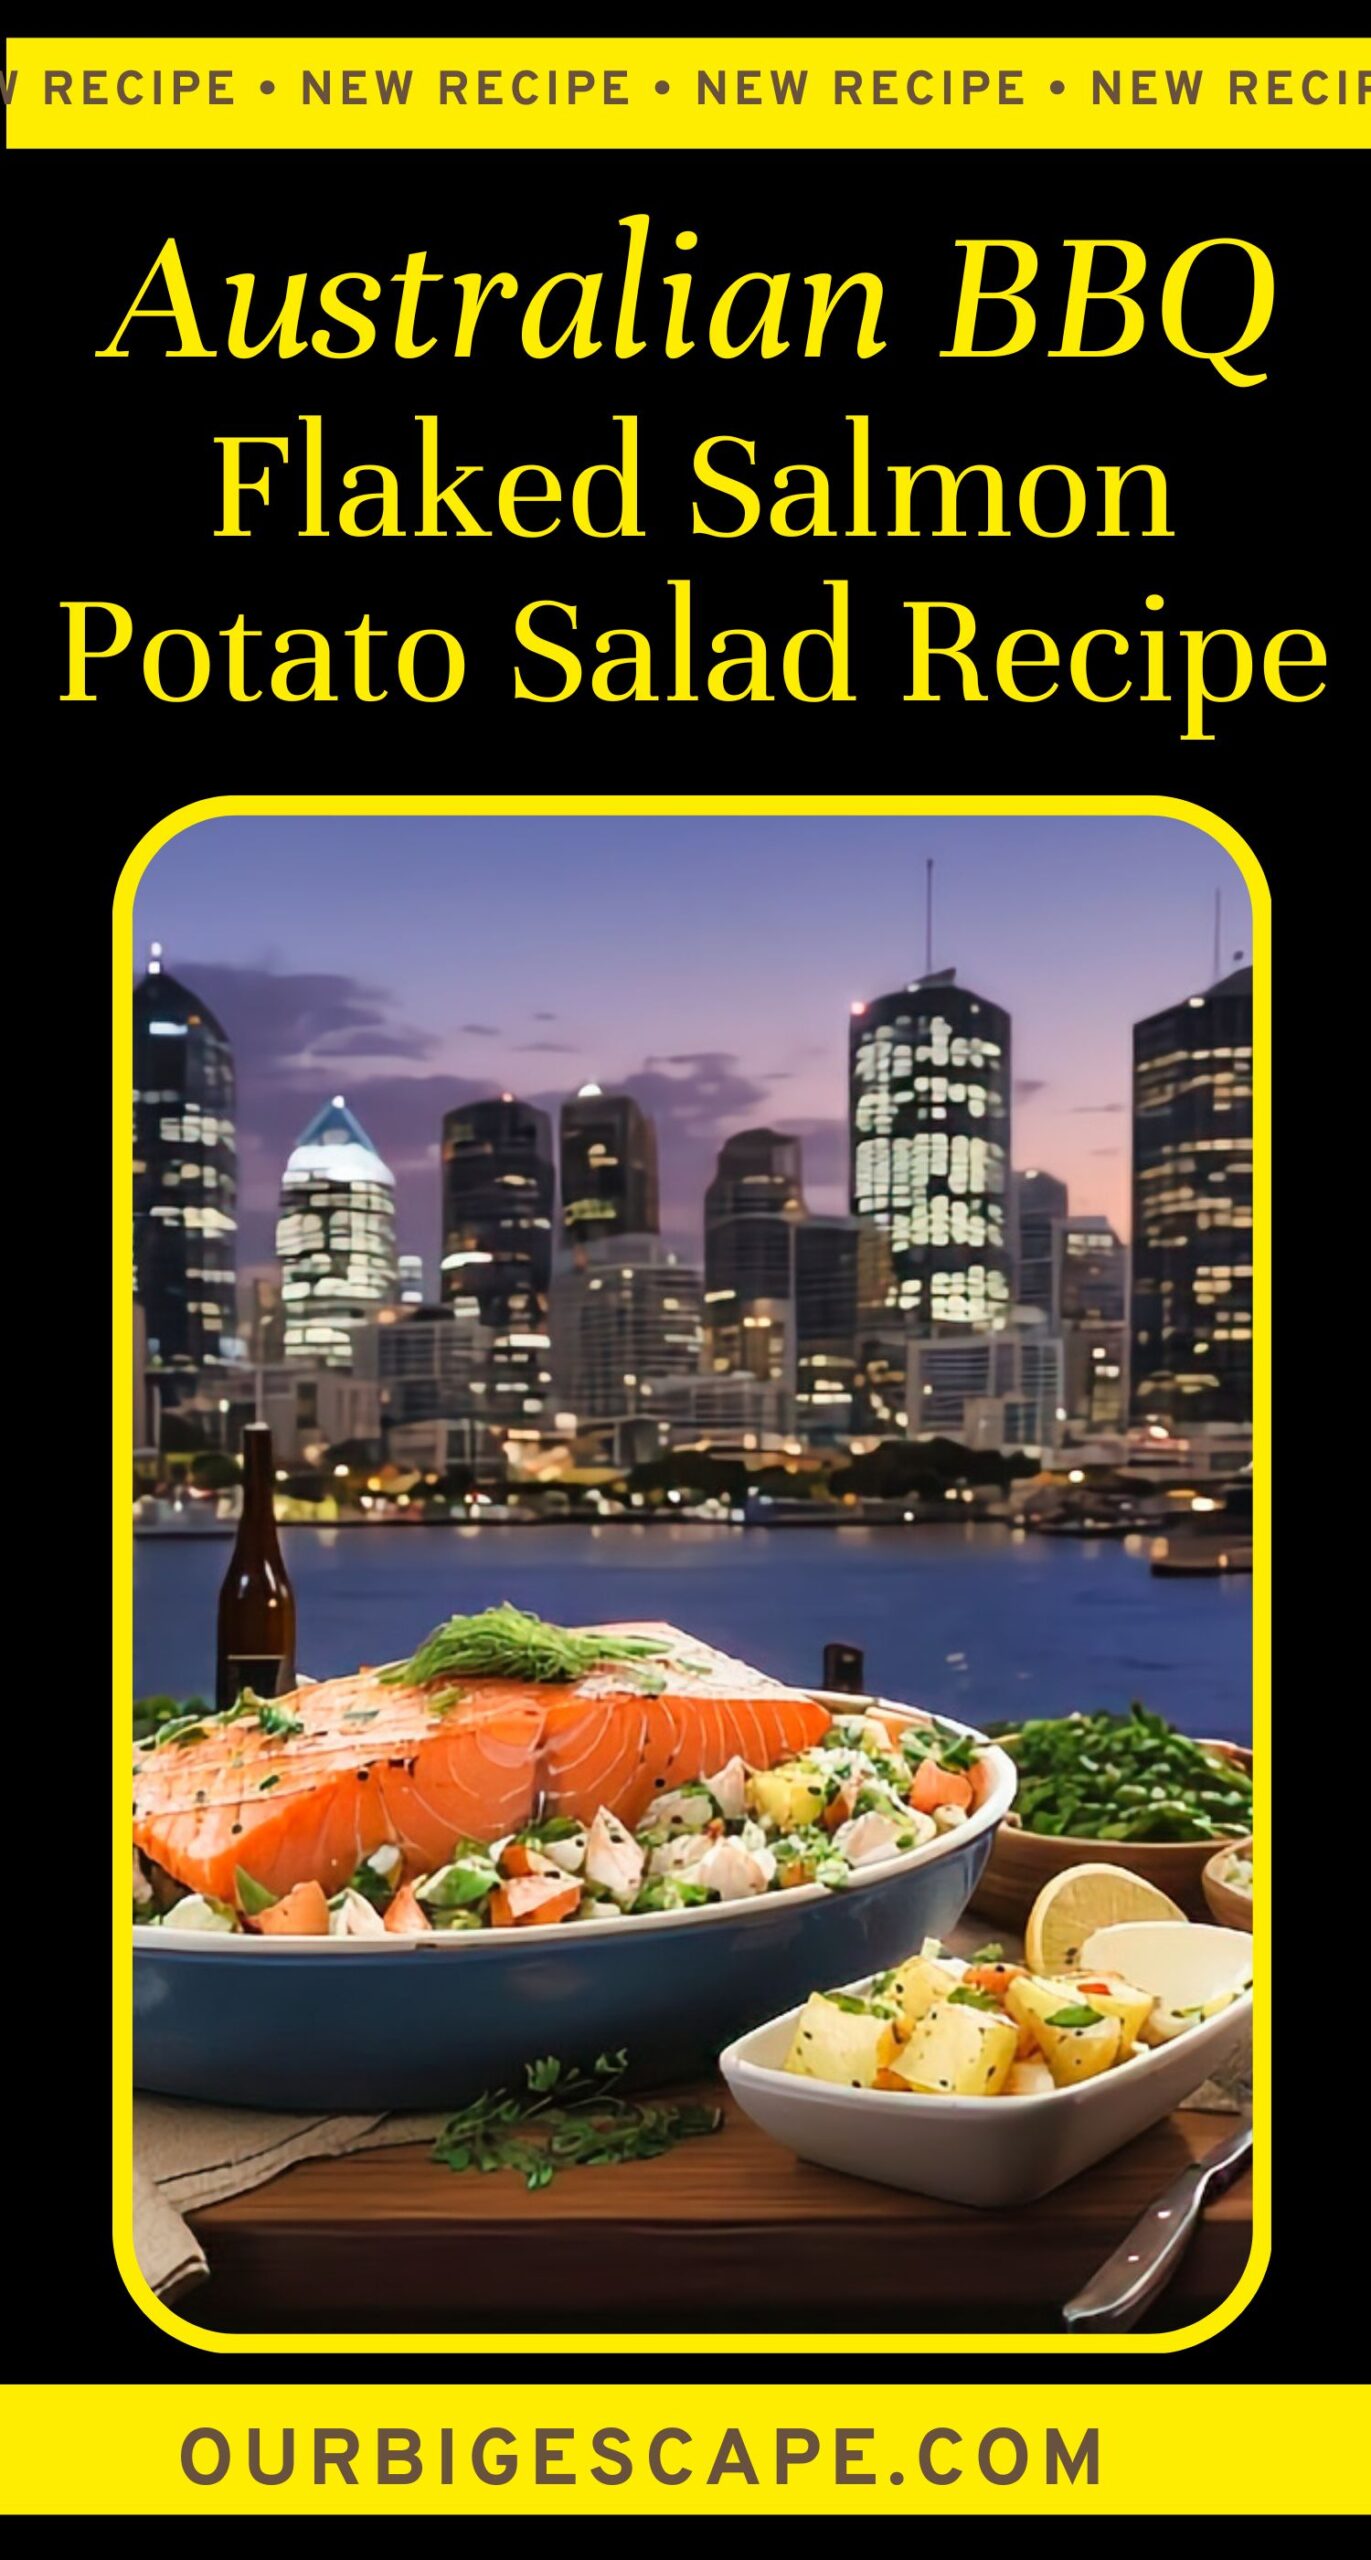 16. Australian BBQ Flaked Salmon Potato Salad Recipe